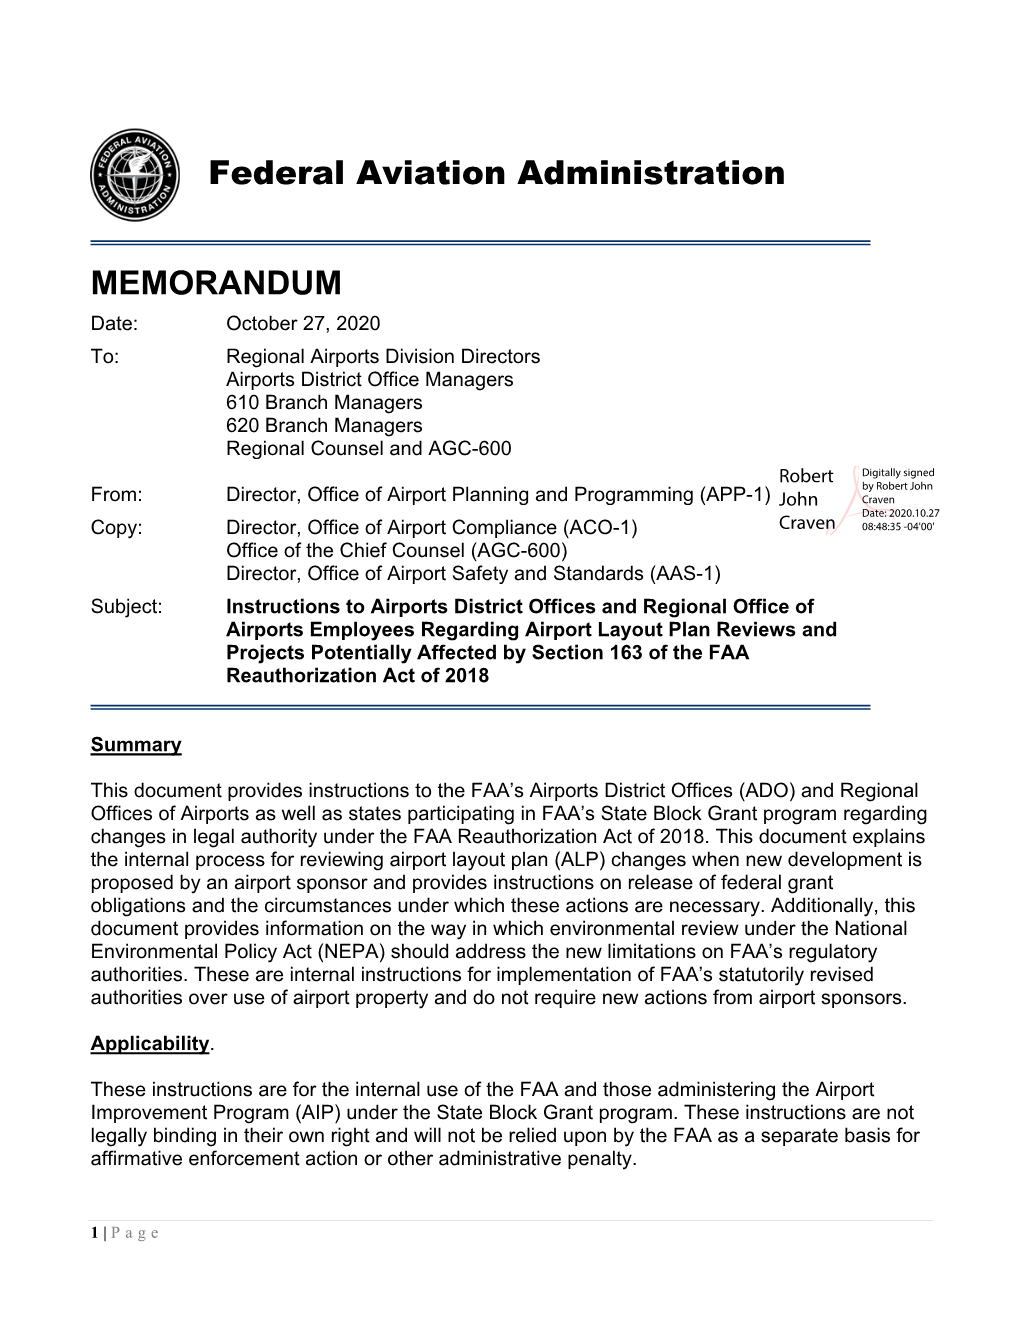 Federal Aviation Administration MEMORANDUM